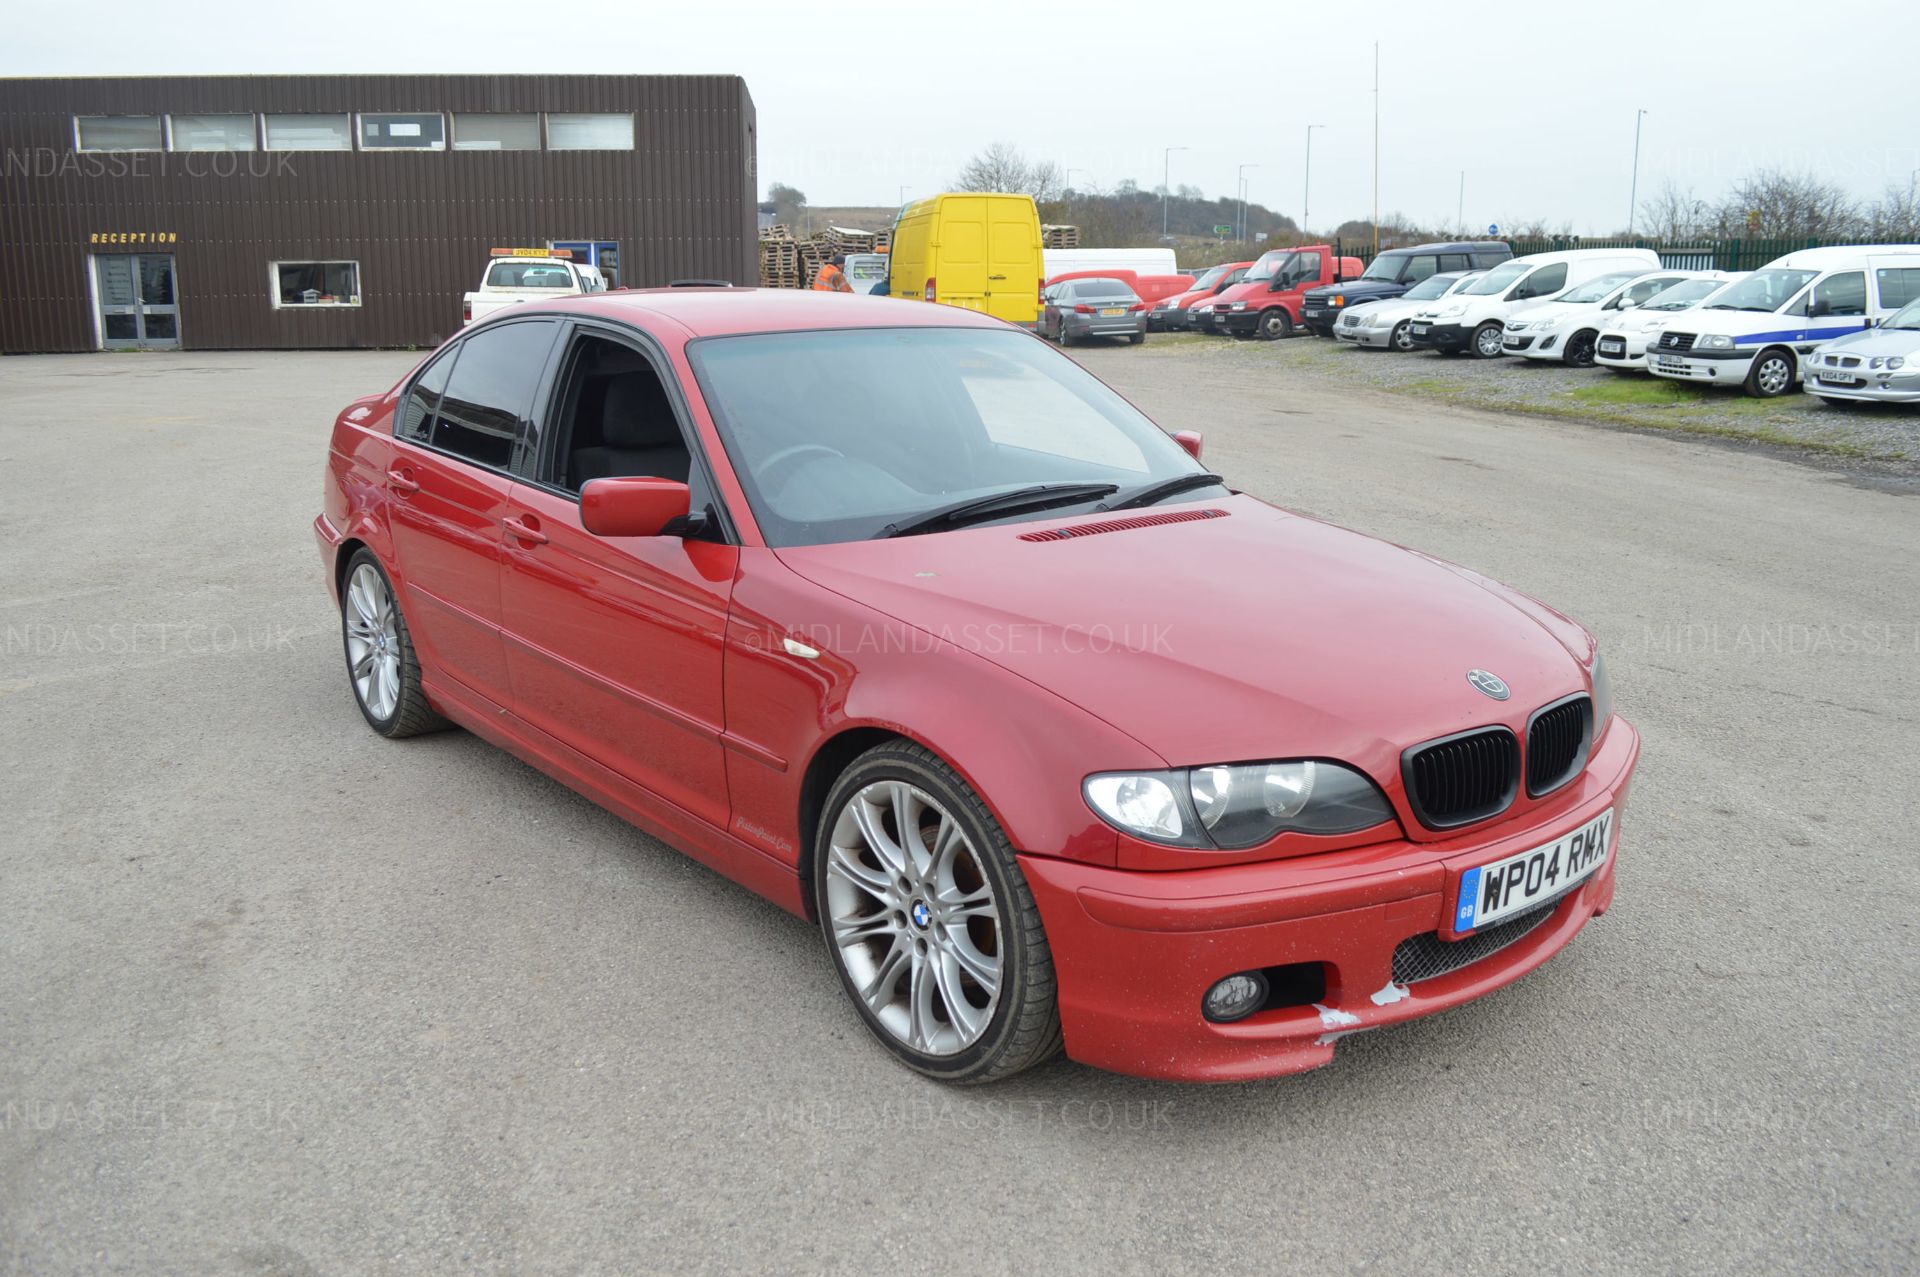 2004/04 REG BMW 320D SPORT 2.0 MANUAL METALLIC RED *NO VAT*